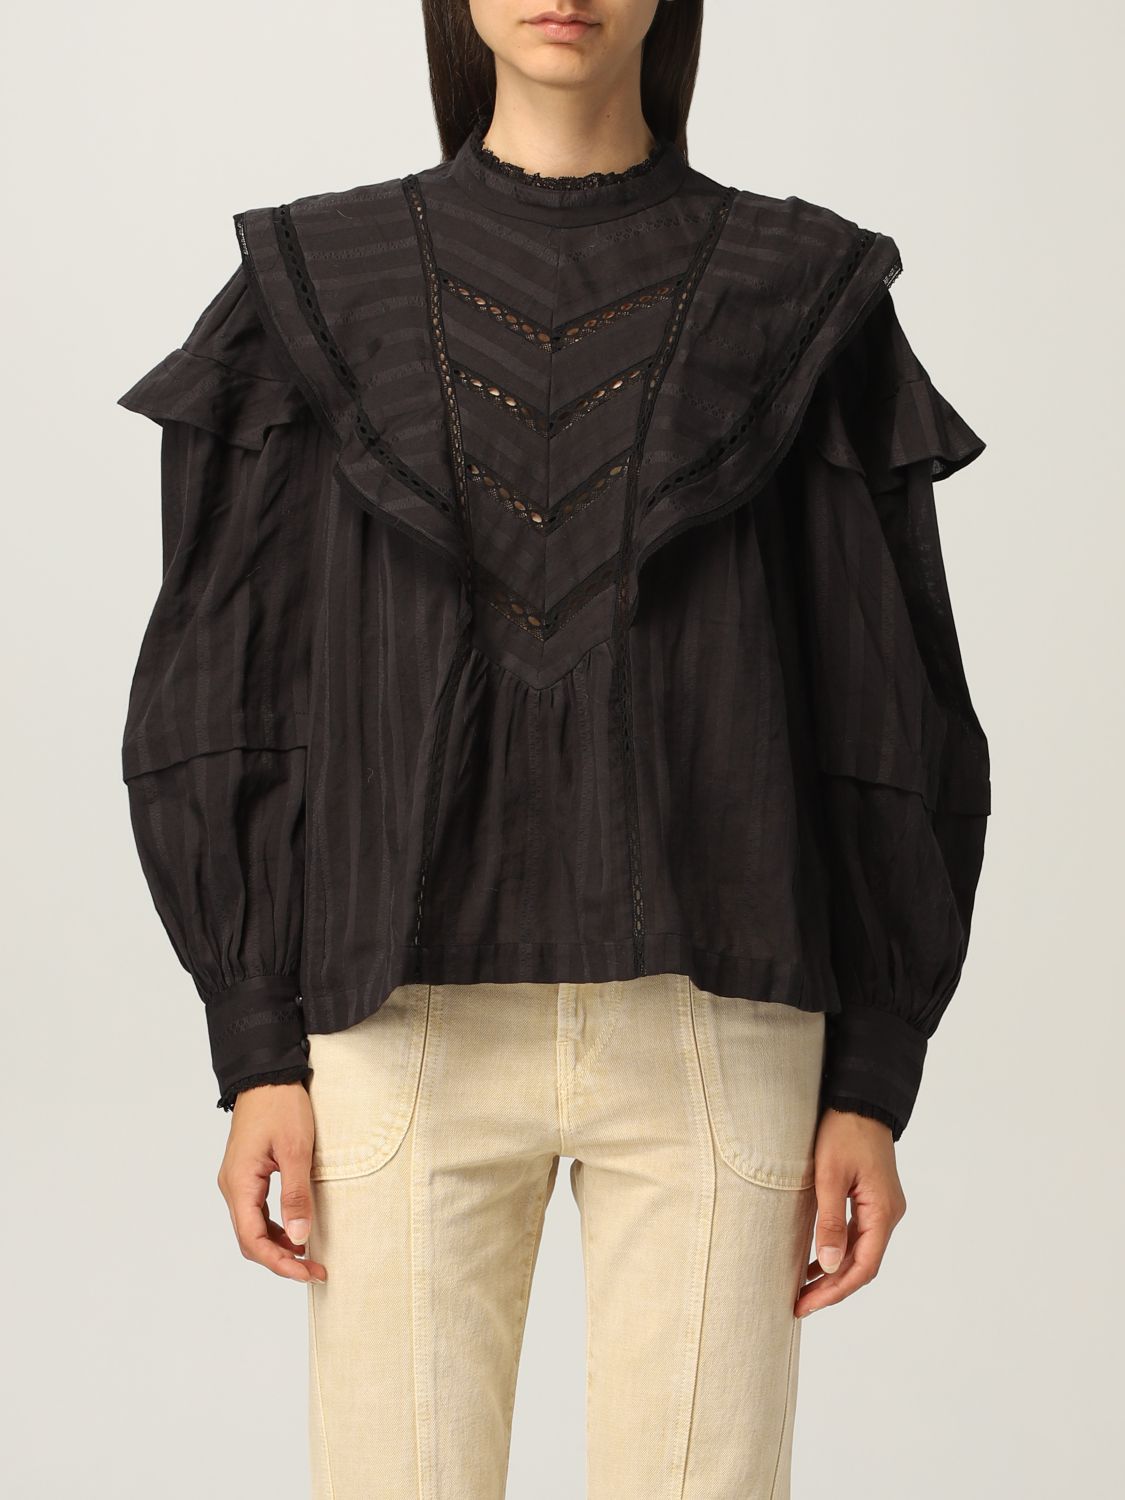 stof in de ogen gooien Verstrikking onderpand ISABEL MARANT ETOILE: cotton blouse with ruffles - Black | Isabel Marant  Etoile top HT182921A025E online on GIGLIO.COM